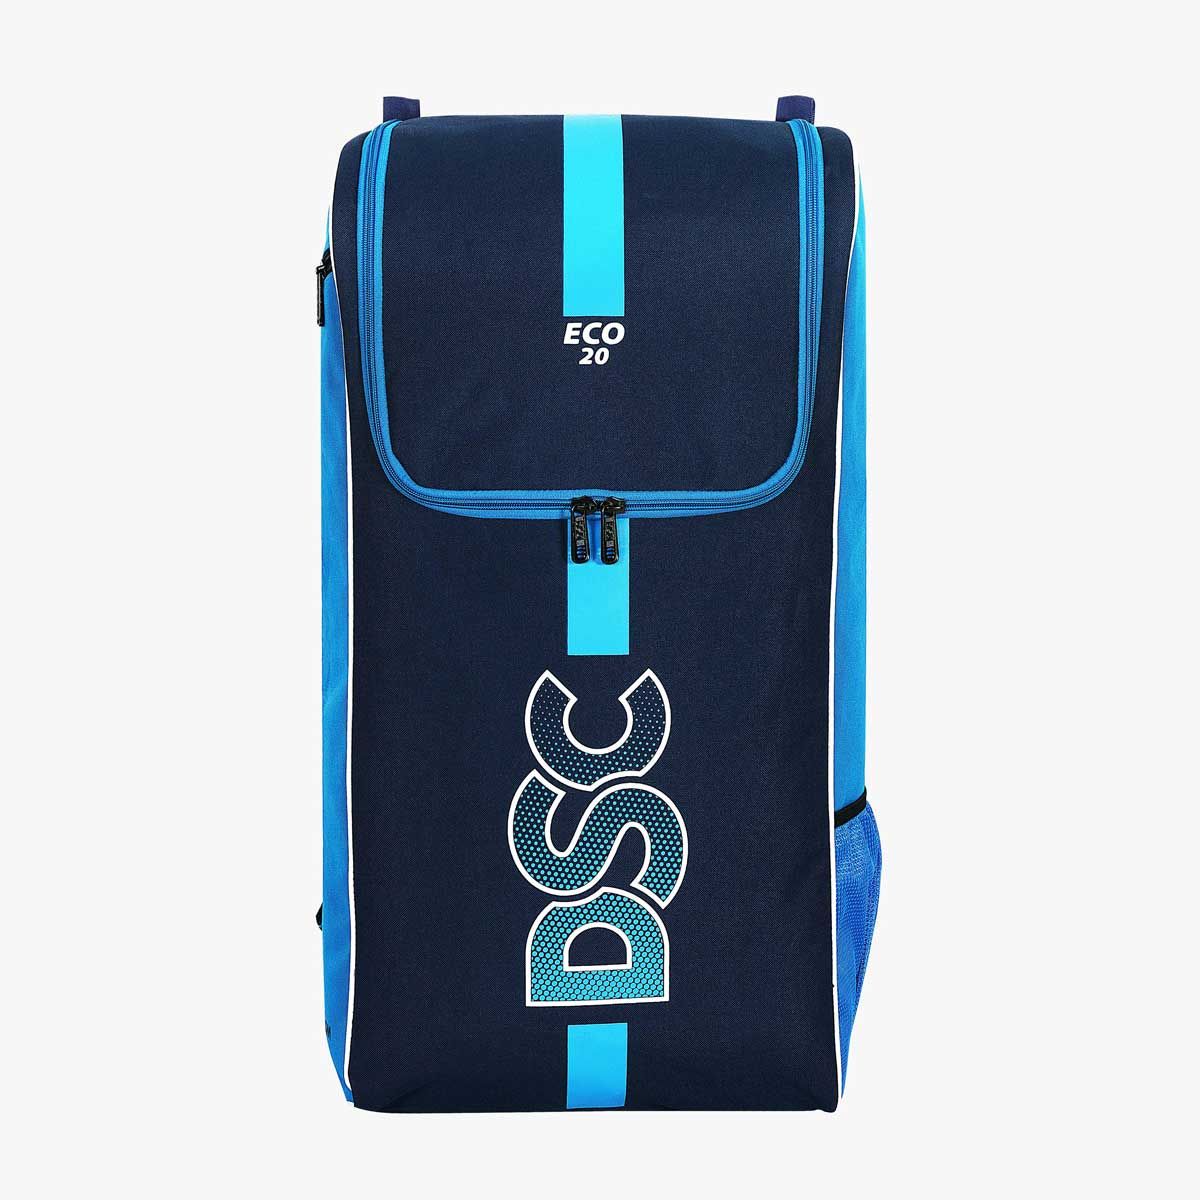 DSC Cricket Eco 20 Duffle Bag